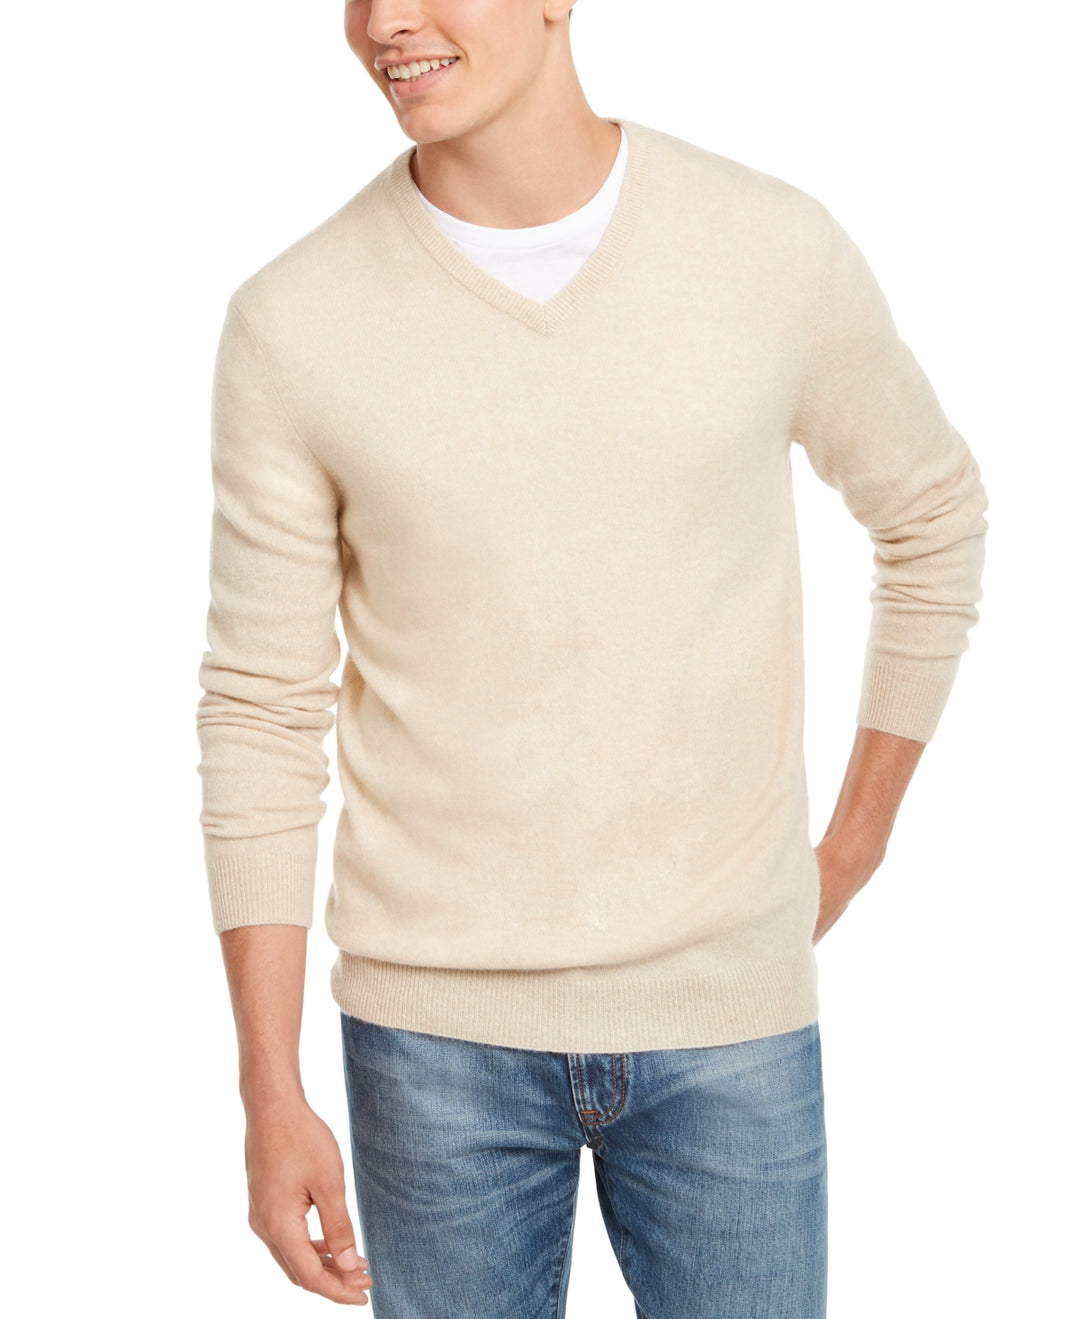 Club Room Men's V Neck Cashmere Sweater Beige Size XX-Large